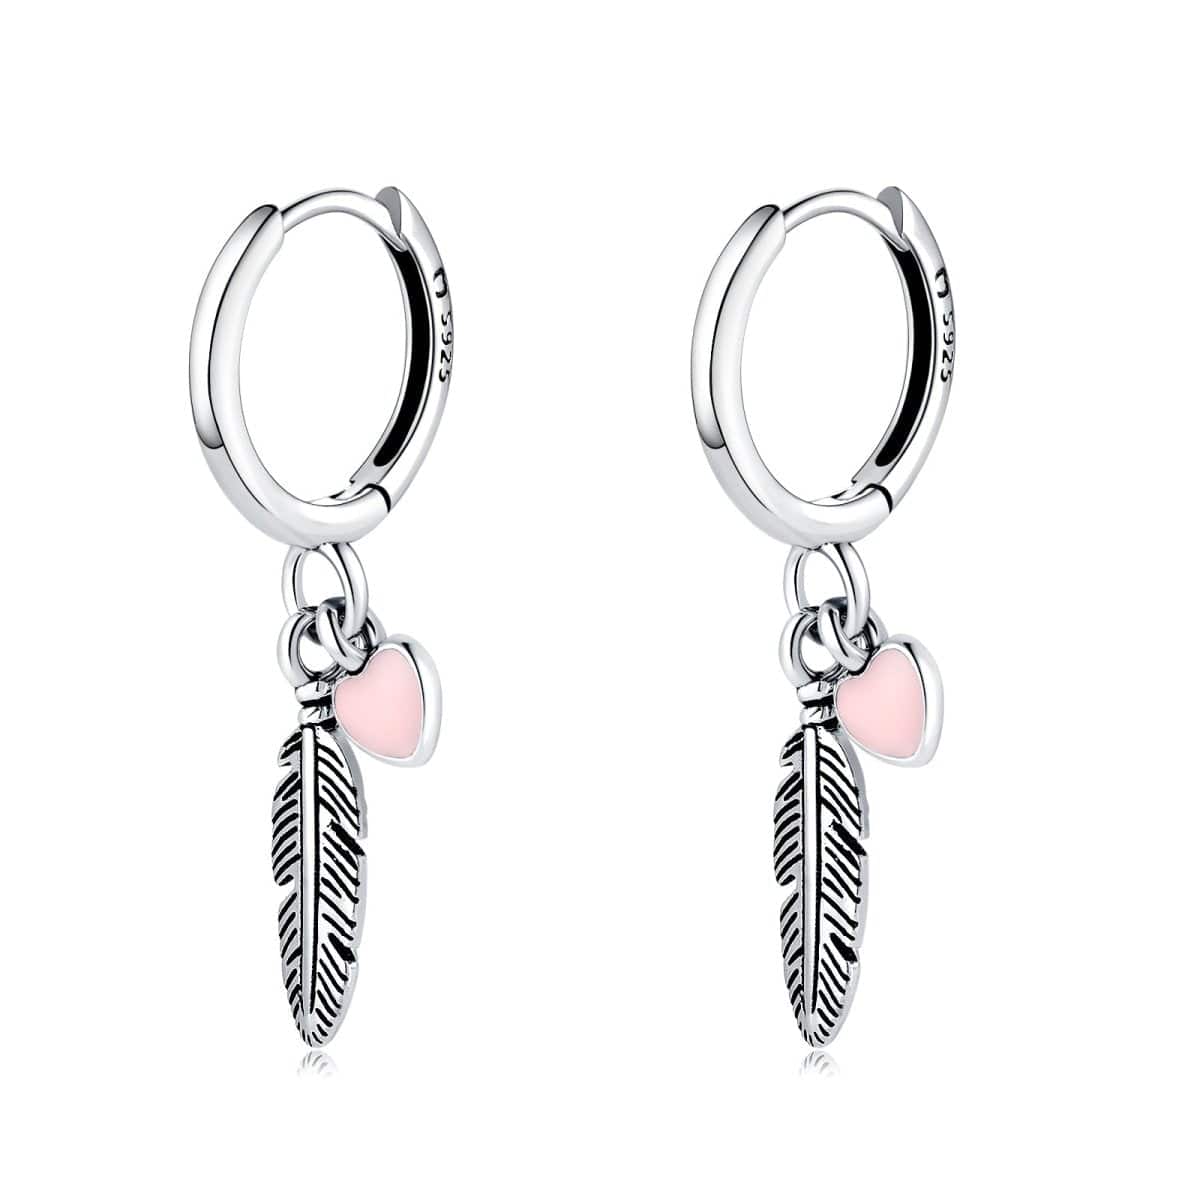 "Feathers of Love" Earrings - Milas Jewels Shop